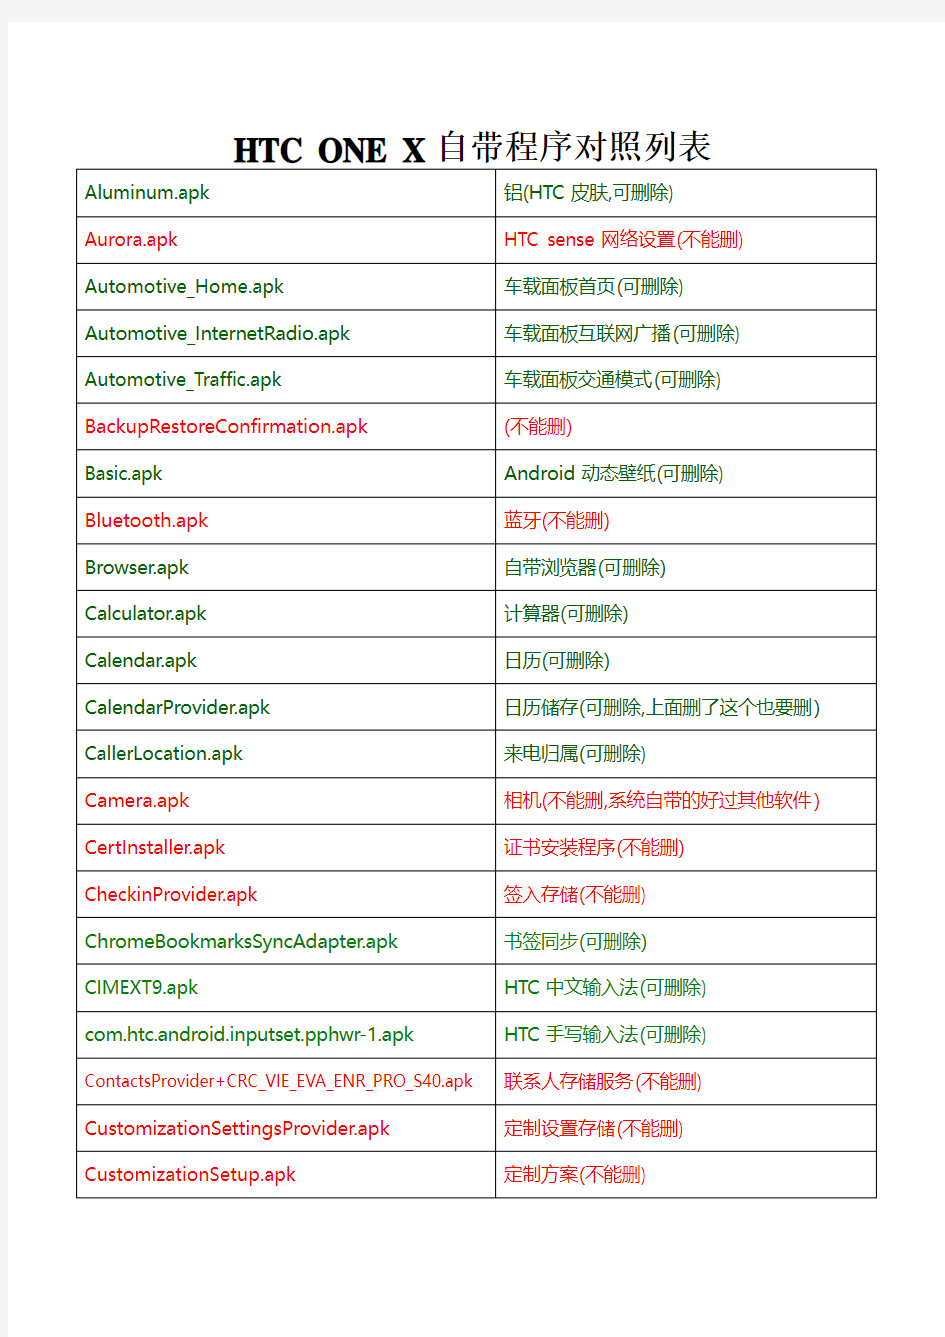 HTC ONE X亚太版系统软件精简表